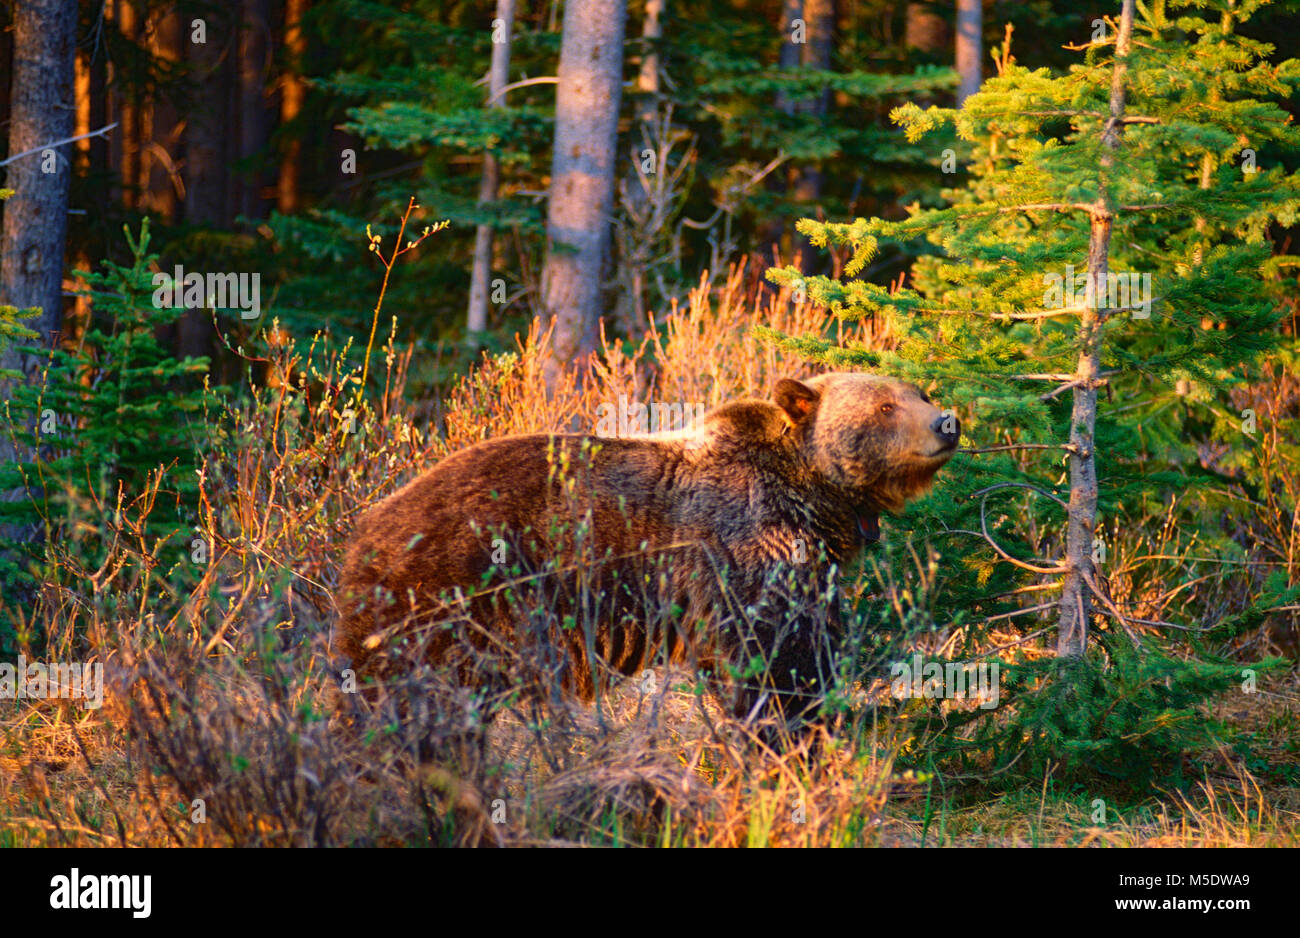 Grizzly Bear, Ursus arctos, Ursidae, tagged, Bear, mammal, animal, Kananskis Provincial Park, Alberta, Canada Stock Photo